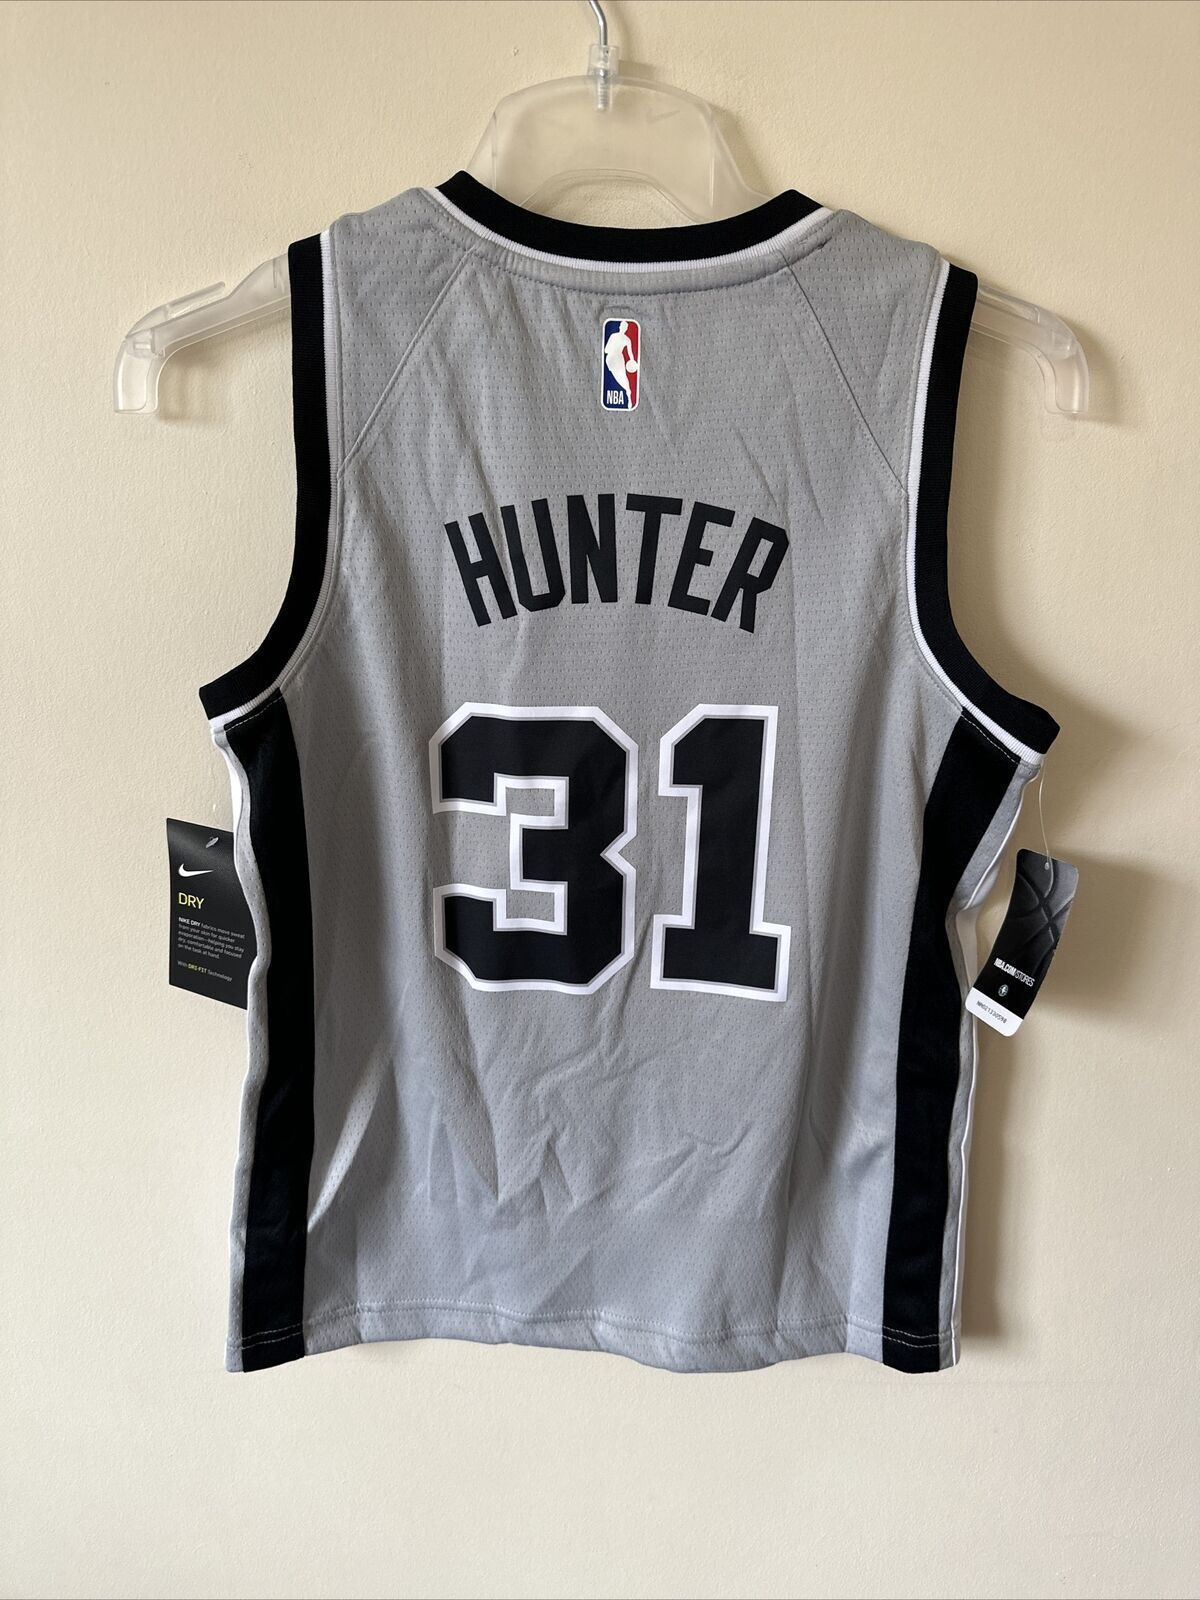 Nike NBA San Antonio Spurs Swingman Jersey HUNTER 31 Youth 10-12 Years